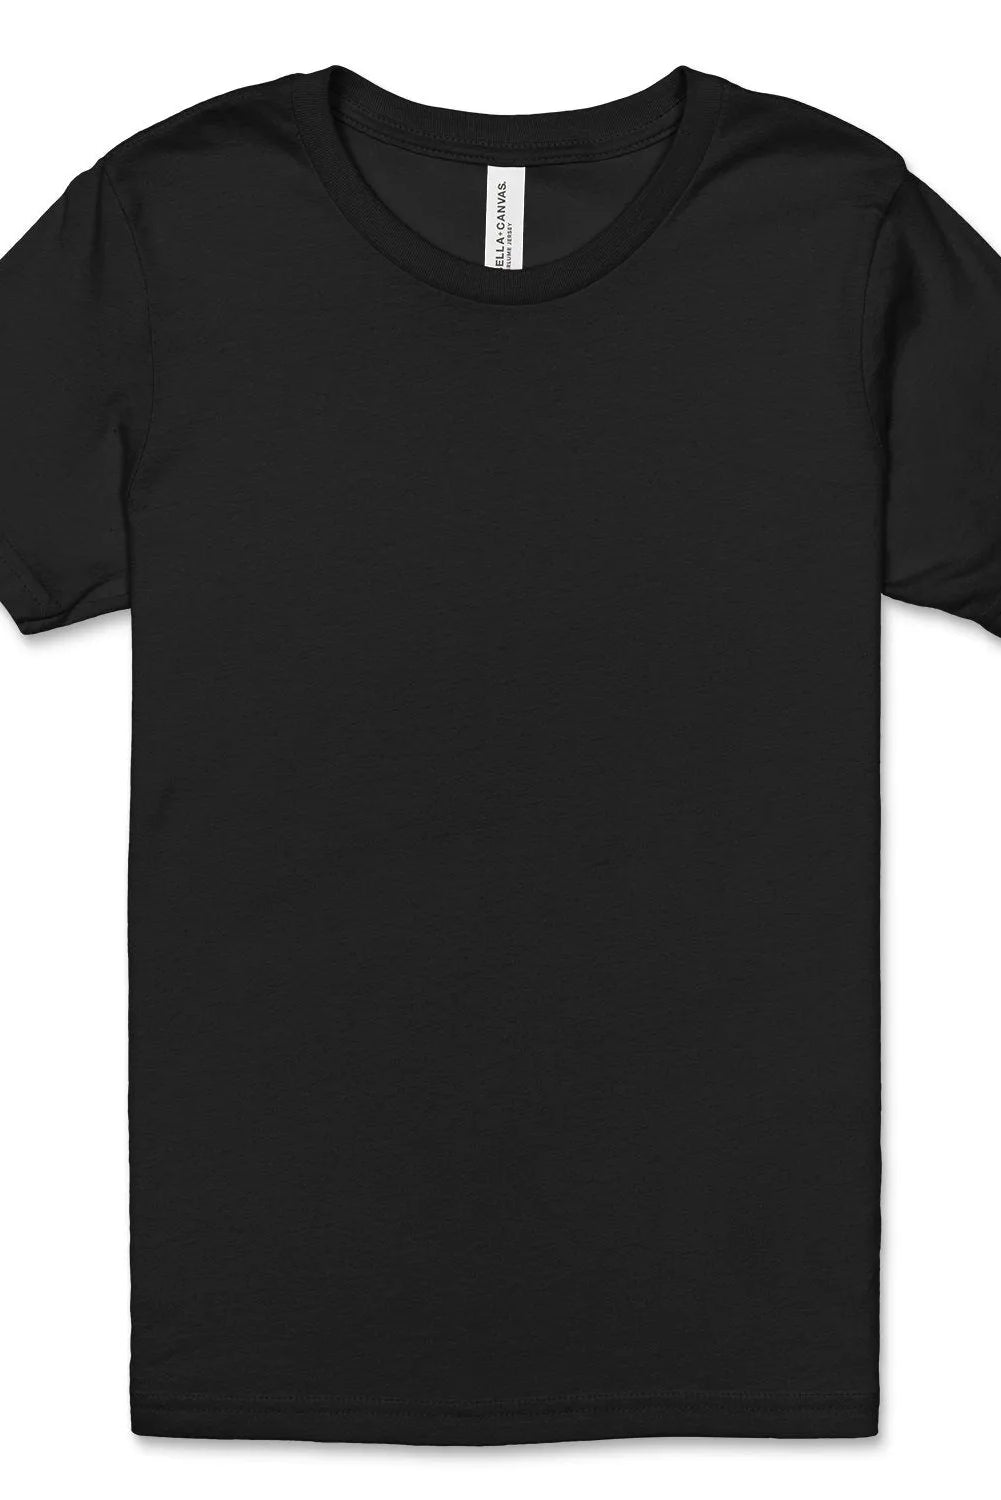 Unisex Jersey Tee - 3001Y - Print Me Shirts